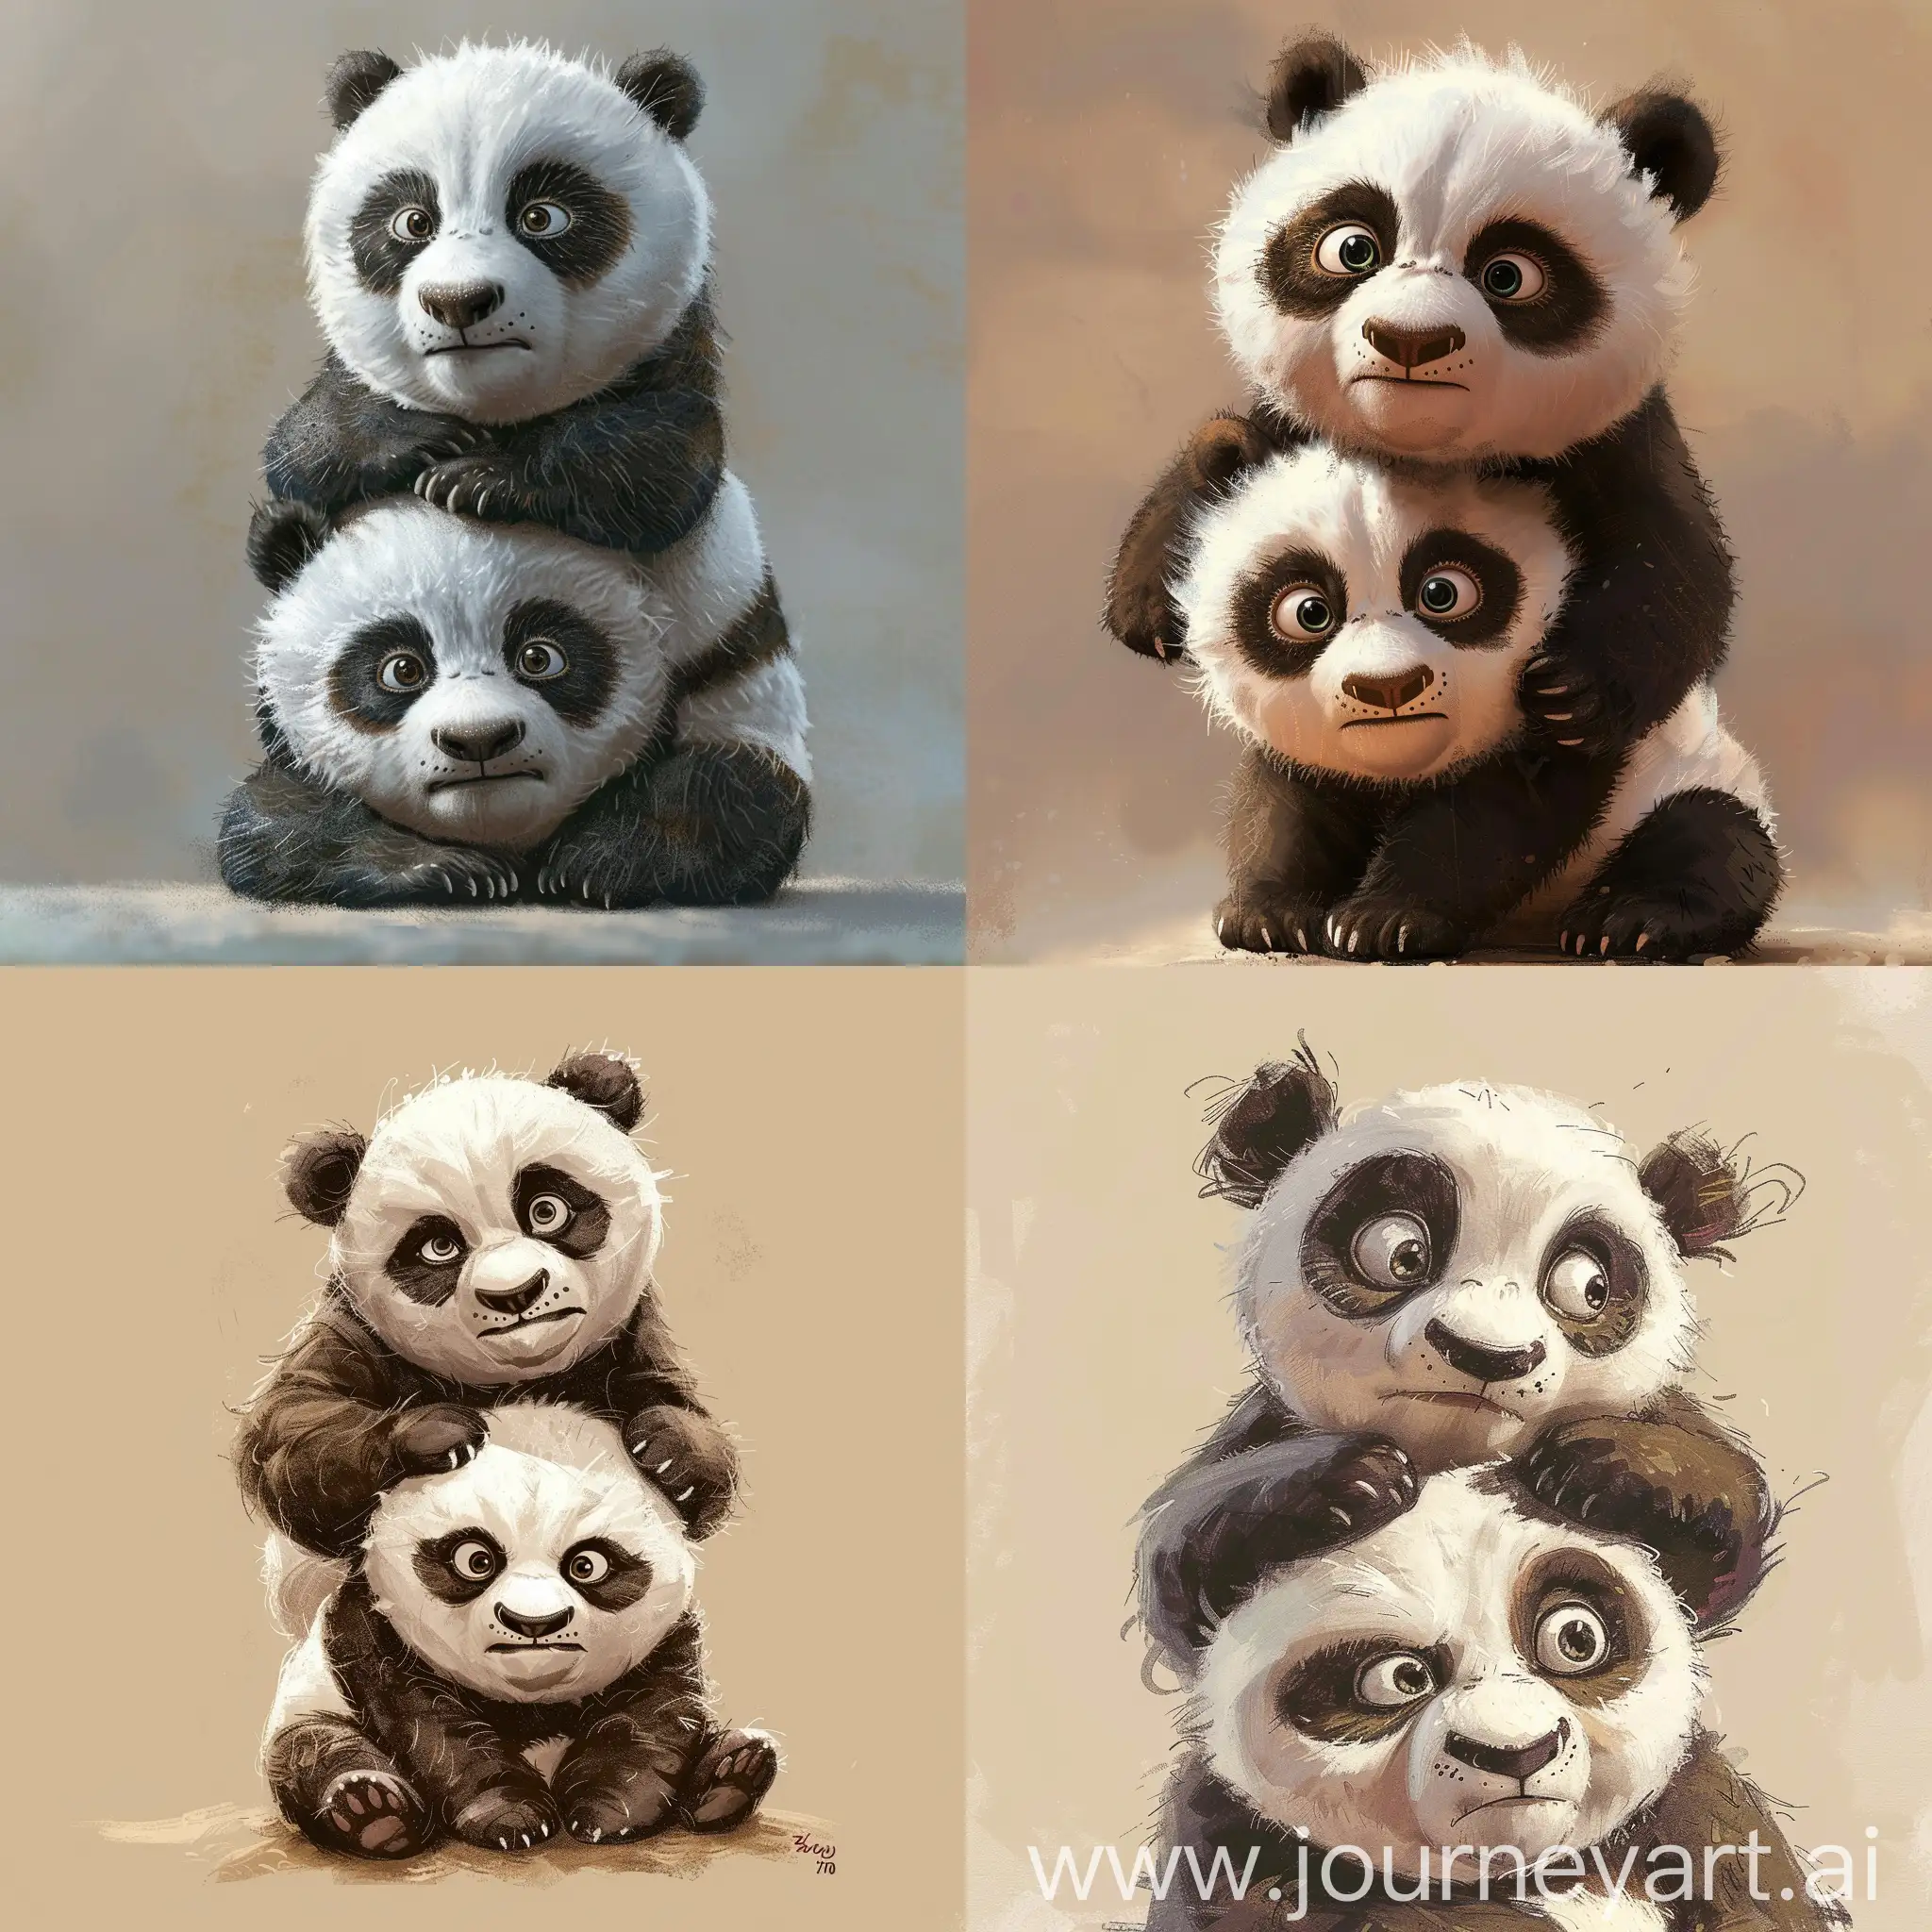 Adorable-Baby-Pandas-Smug-and-Perplexed-Duo-in-Realistic-Kung-Fu-Panda-Style-Art